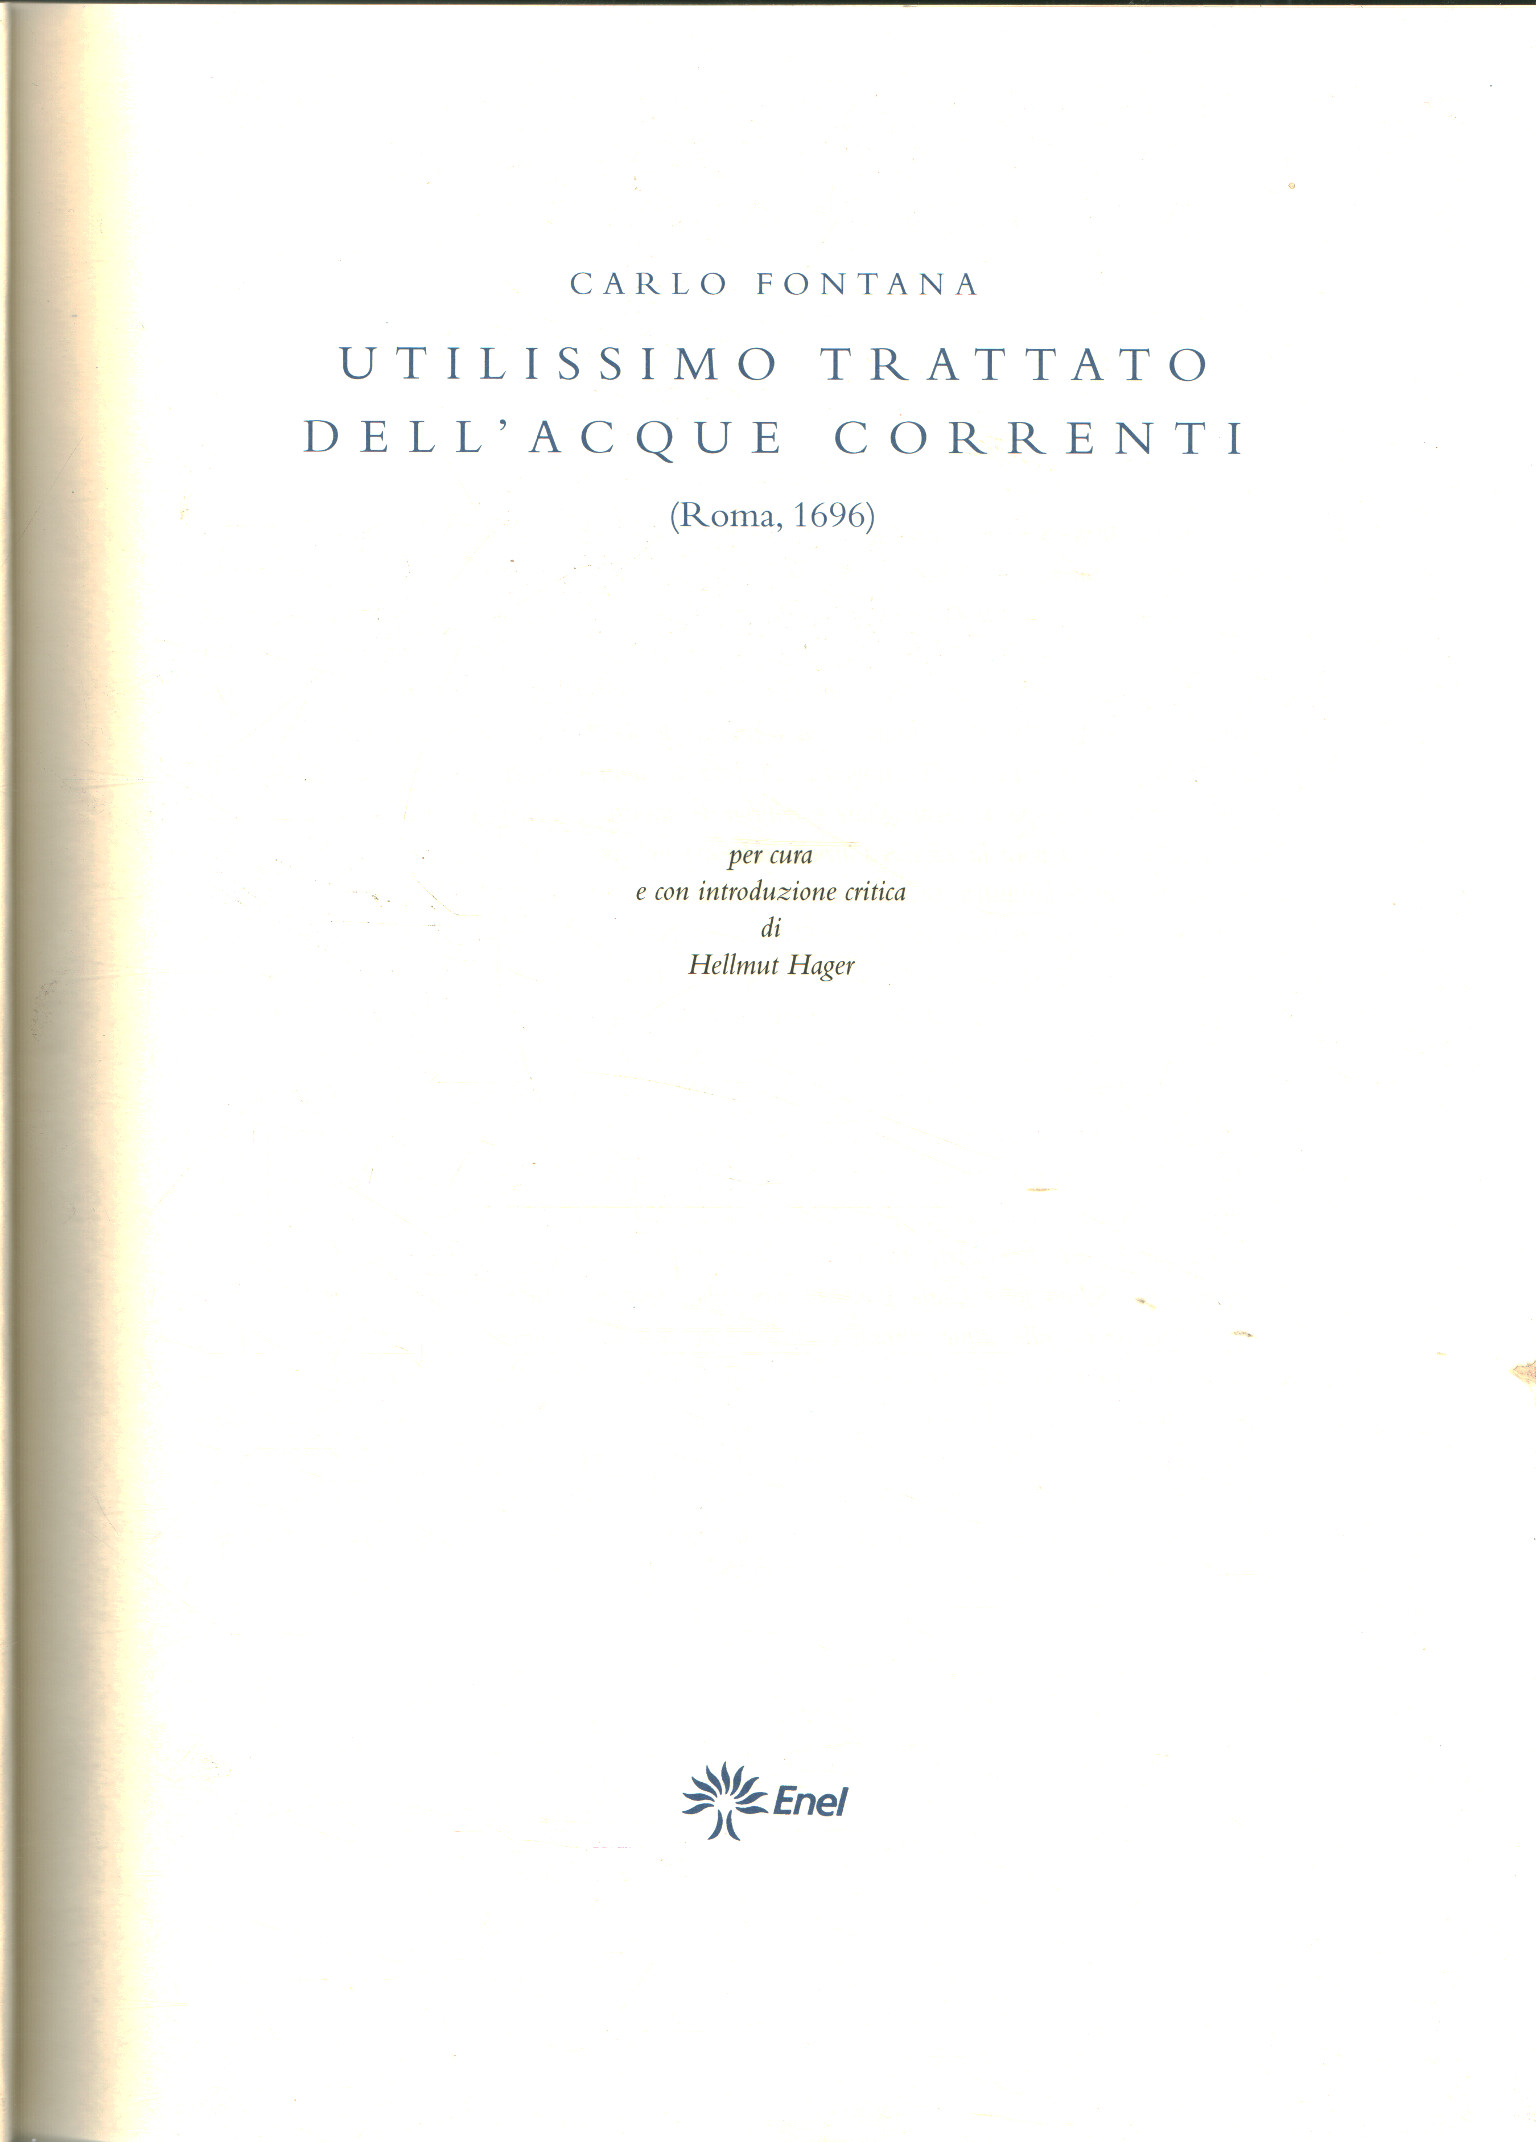 Very useful treaty of running waters, Carlo Fontana